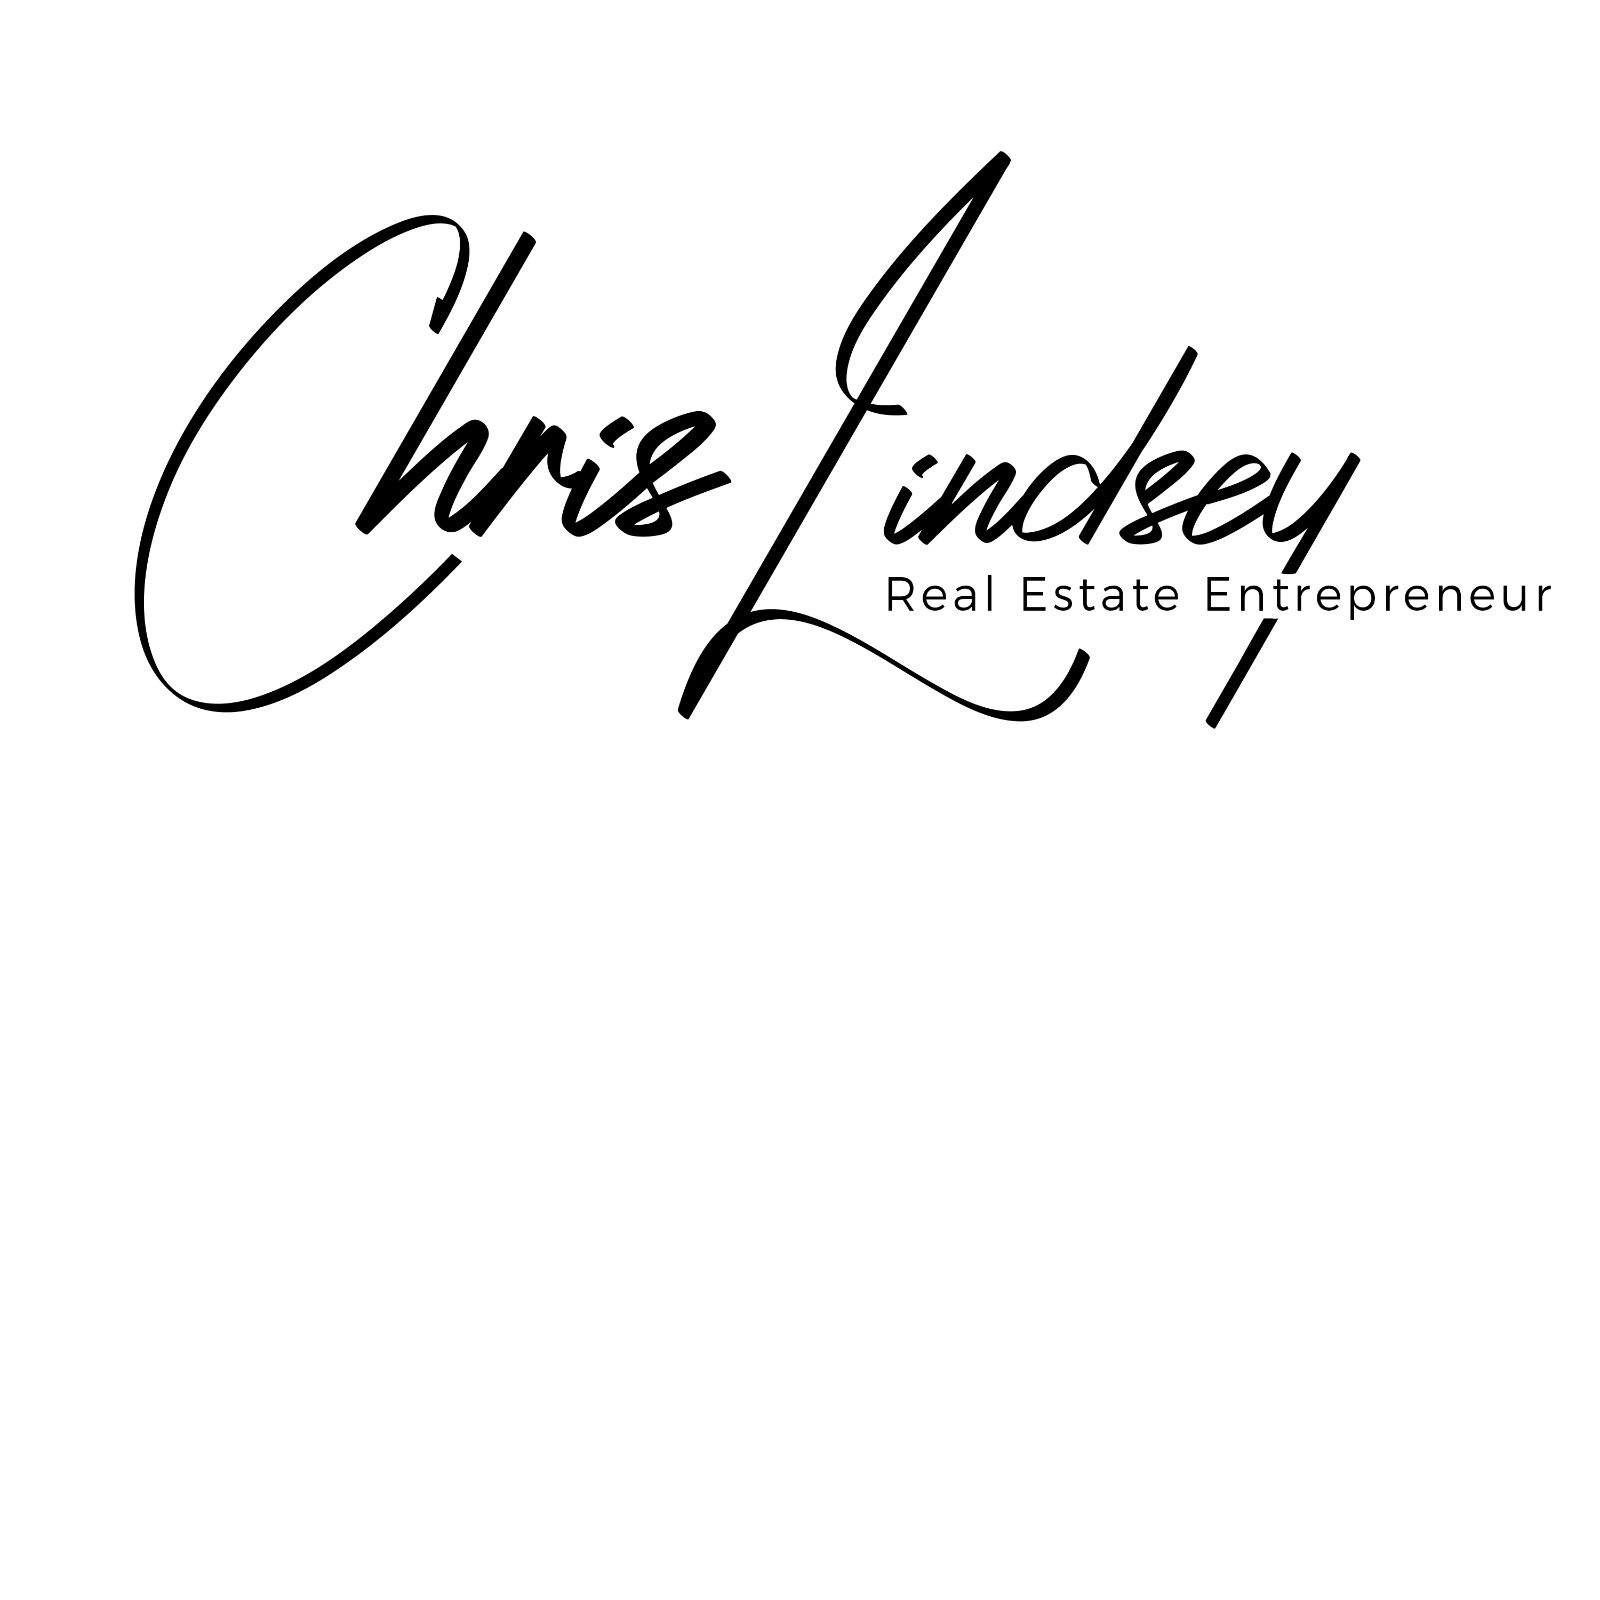 Chris Lindsey – Real Estate Entrepreneur